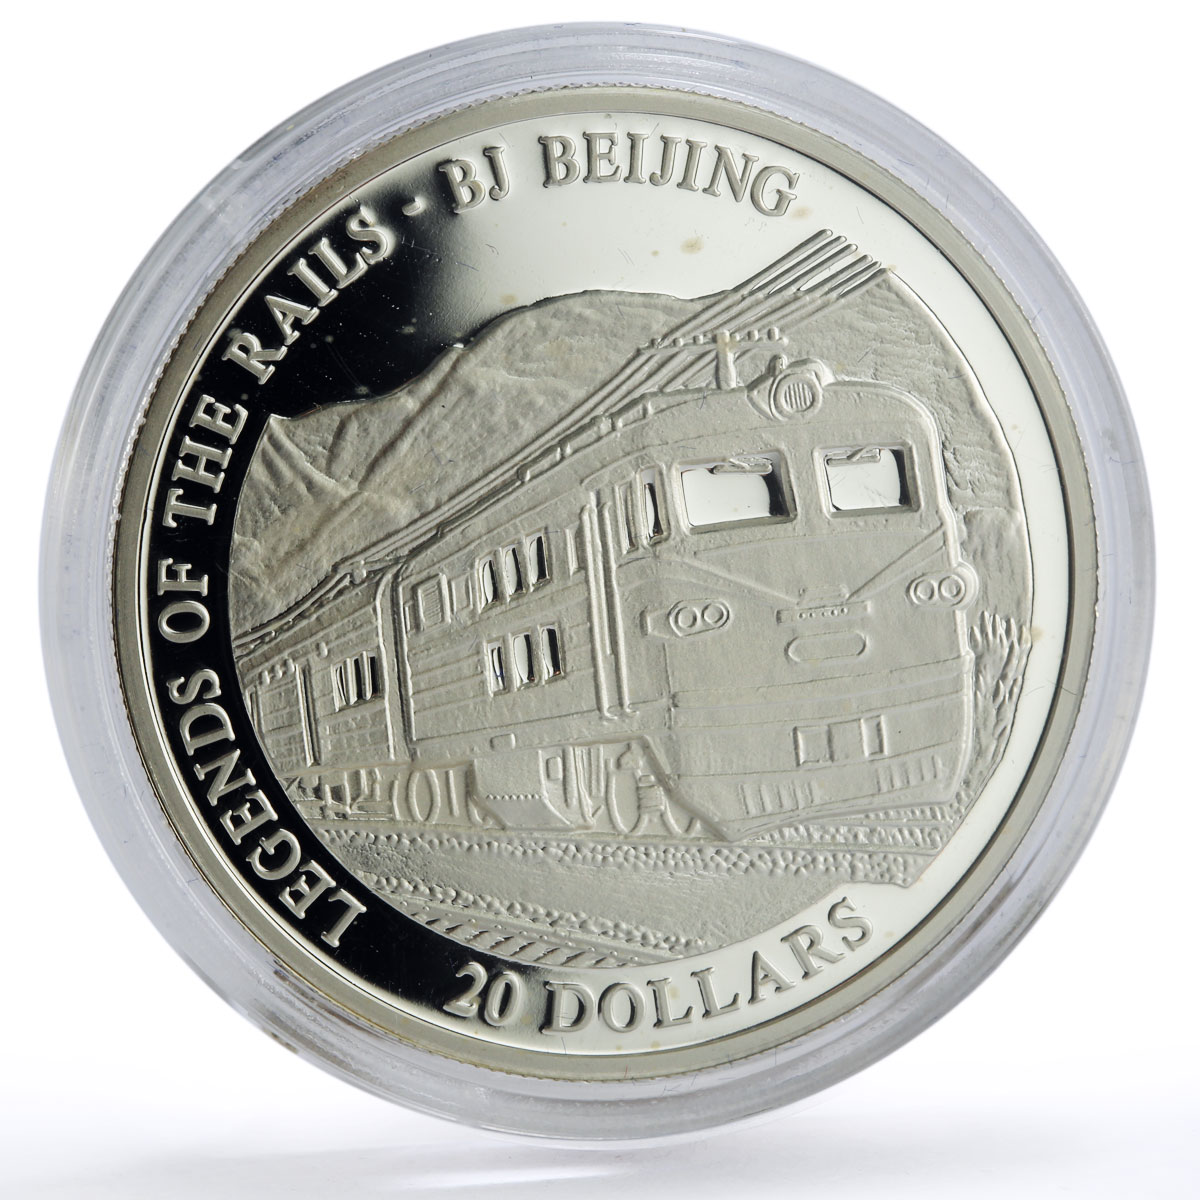 Liberia 20 dollars Trains Railway Locomotive BJ Beijing silver coin 2001